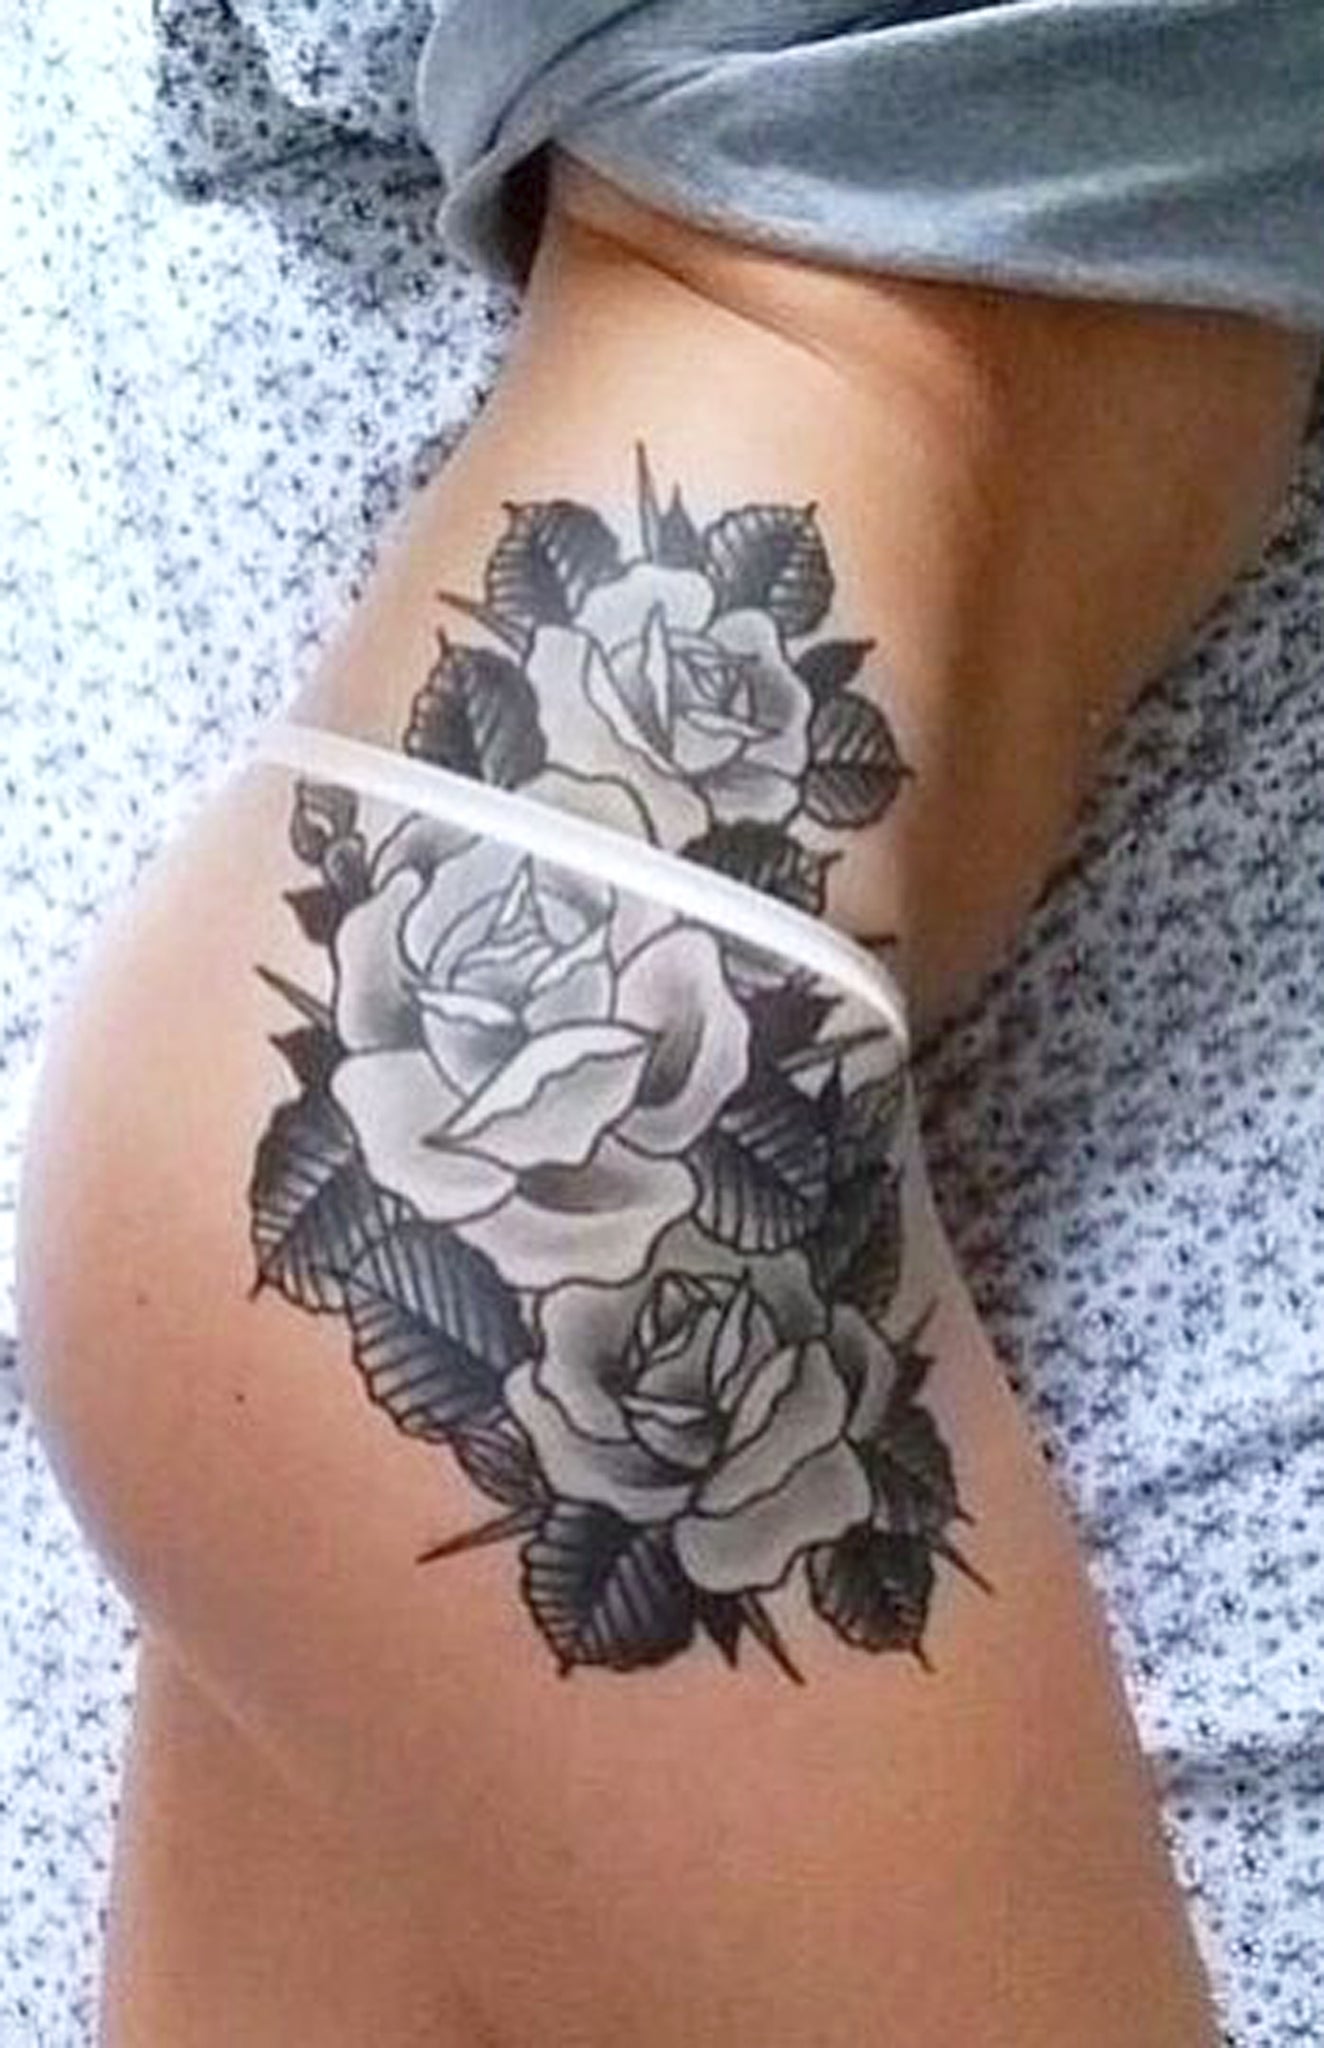 Colorful Rose Thigh Tattoo Ideas for Women - Floral Flower Hip Tat -  ideas coloridas del tatuaje del muslo color de rosa - www.MyBodiArt.com